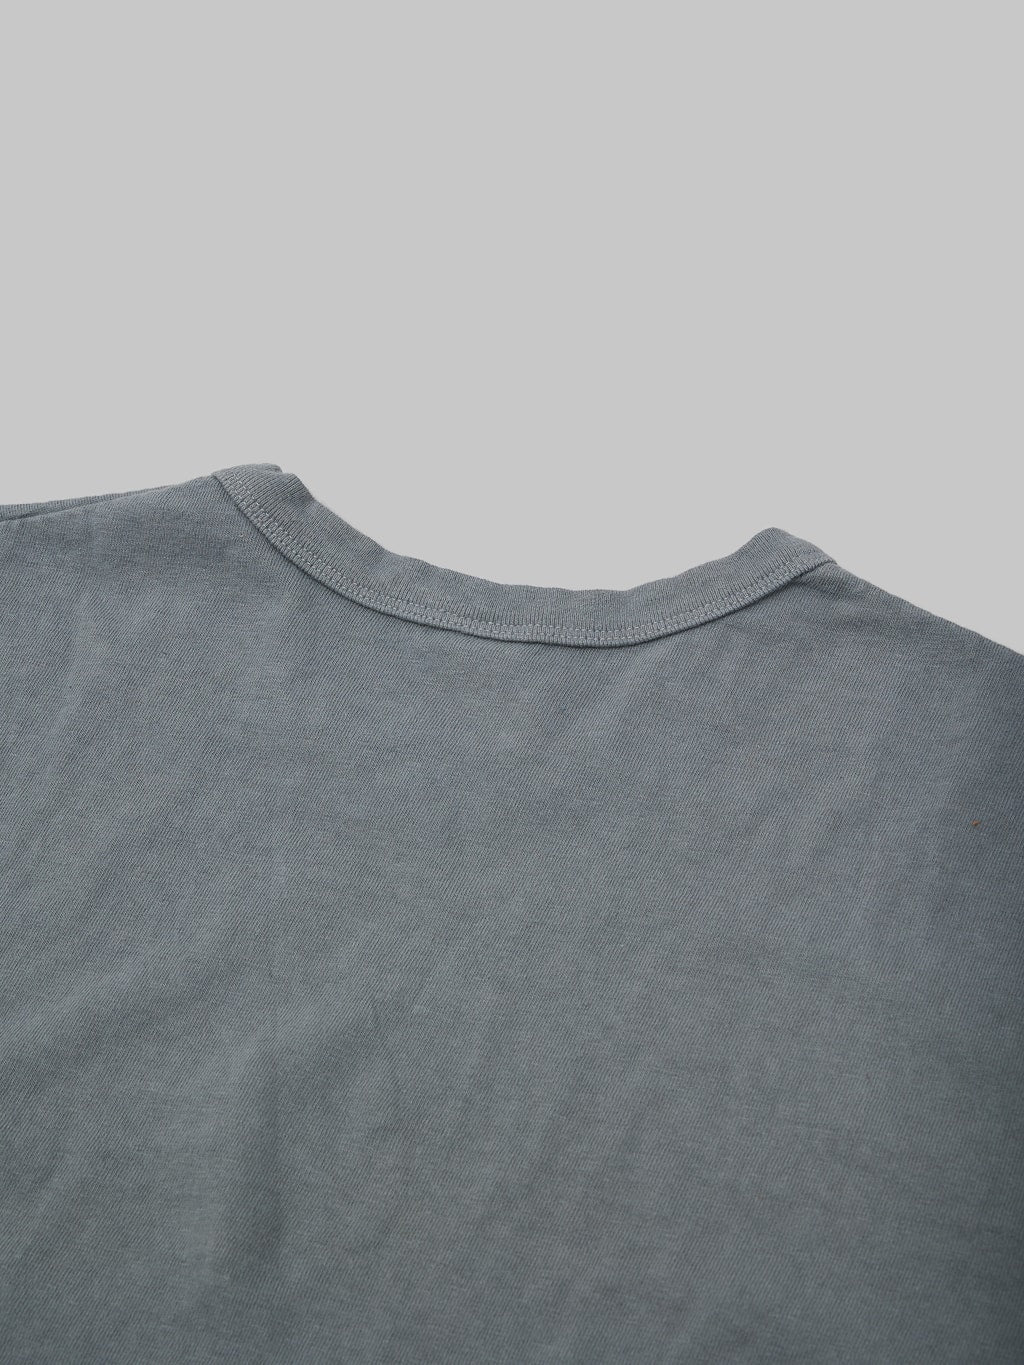 ues logo tshirt grey slim fit vintage reinforced collar